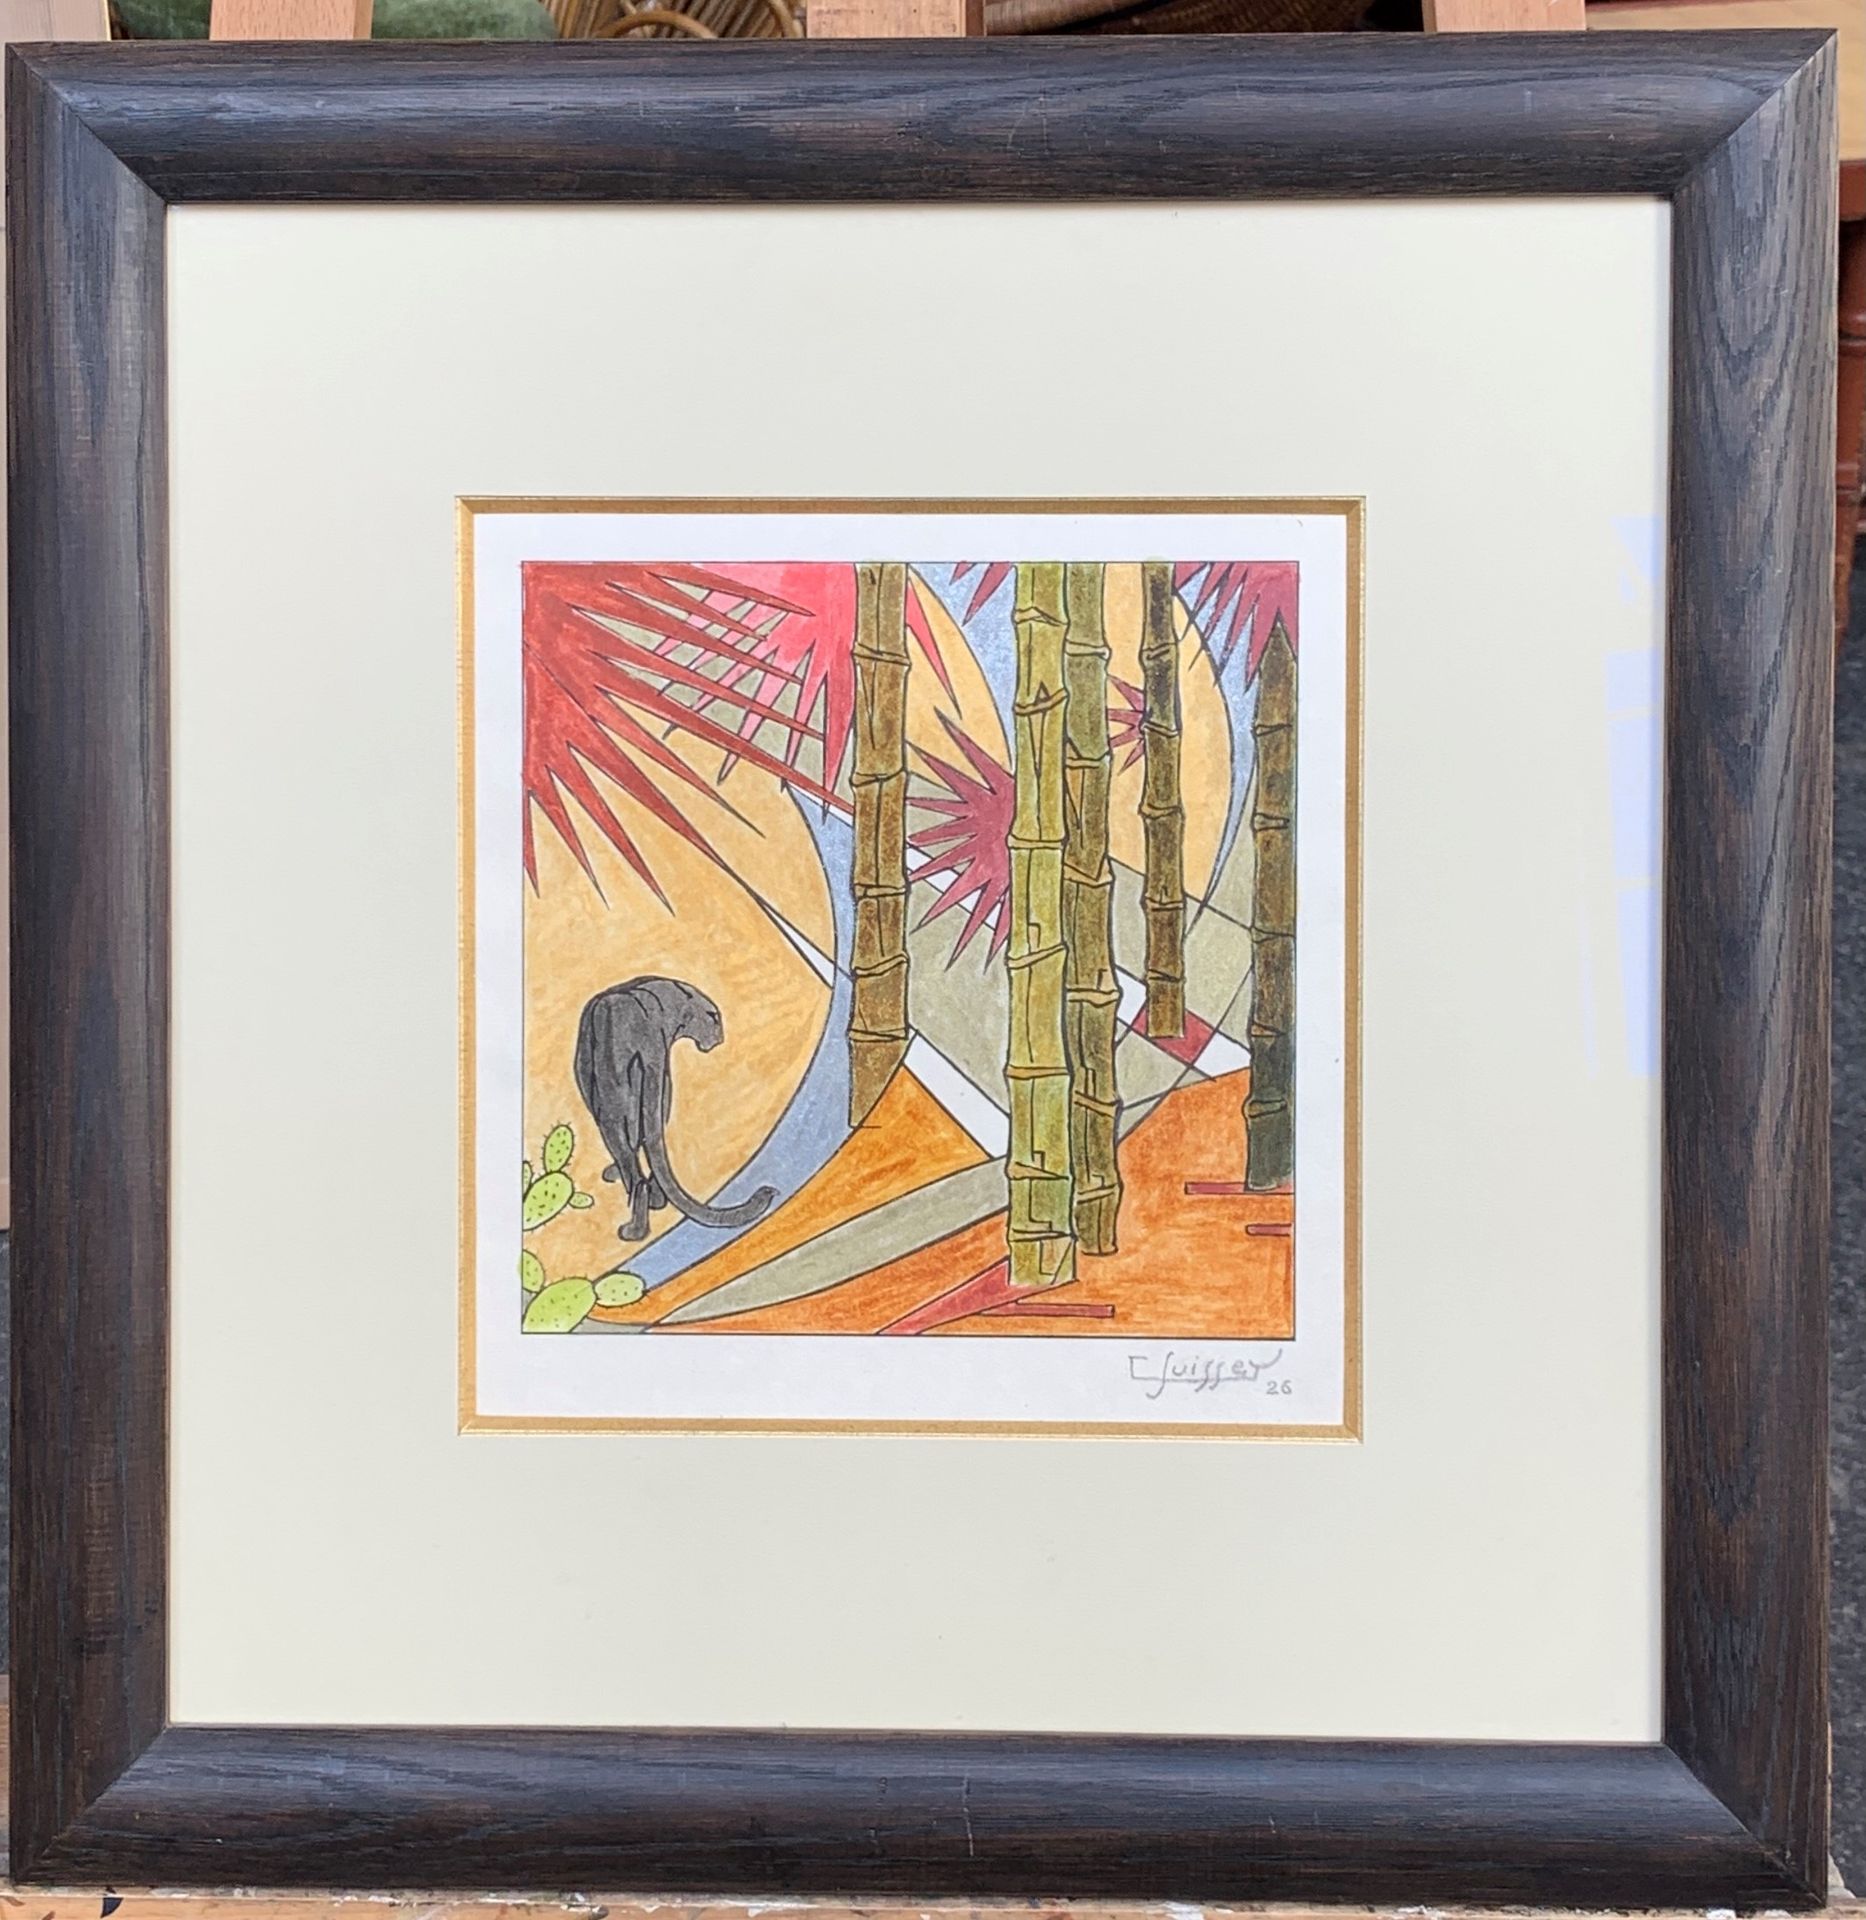 GASTON SUISSE (1896-1988) Pantera nera, 1926

Incisione su legno, su carta perla&hellip;